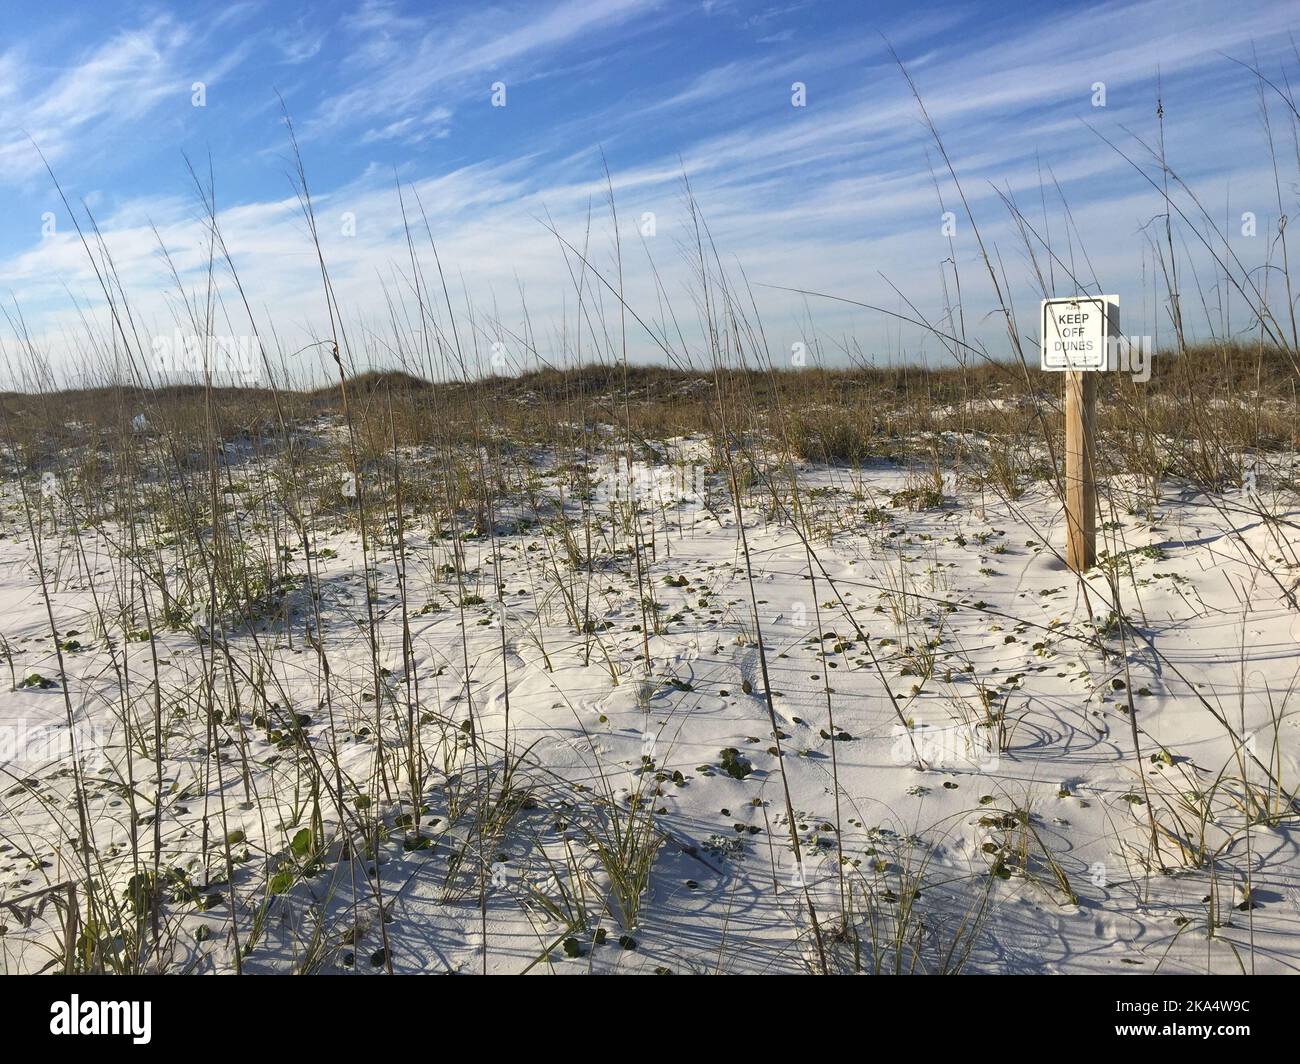 Keep off Dunes sign on beach, Pensacola, Santa Rosa, Florida, USA Stock Photo